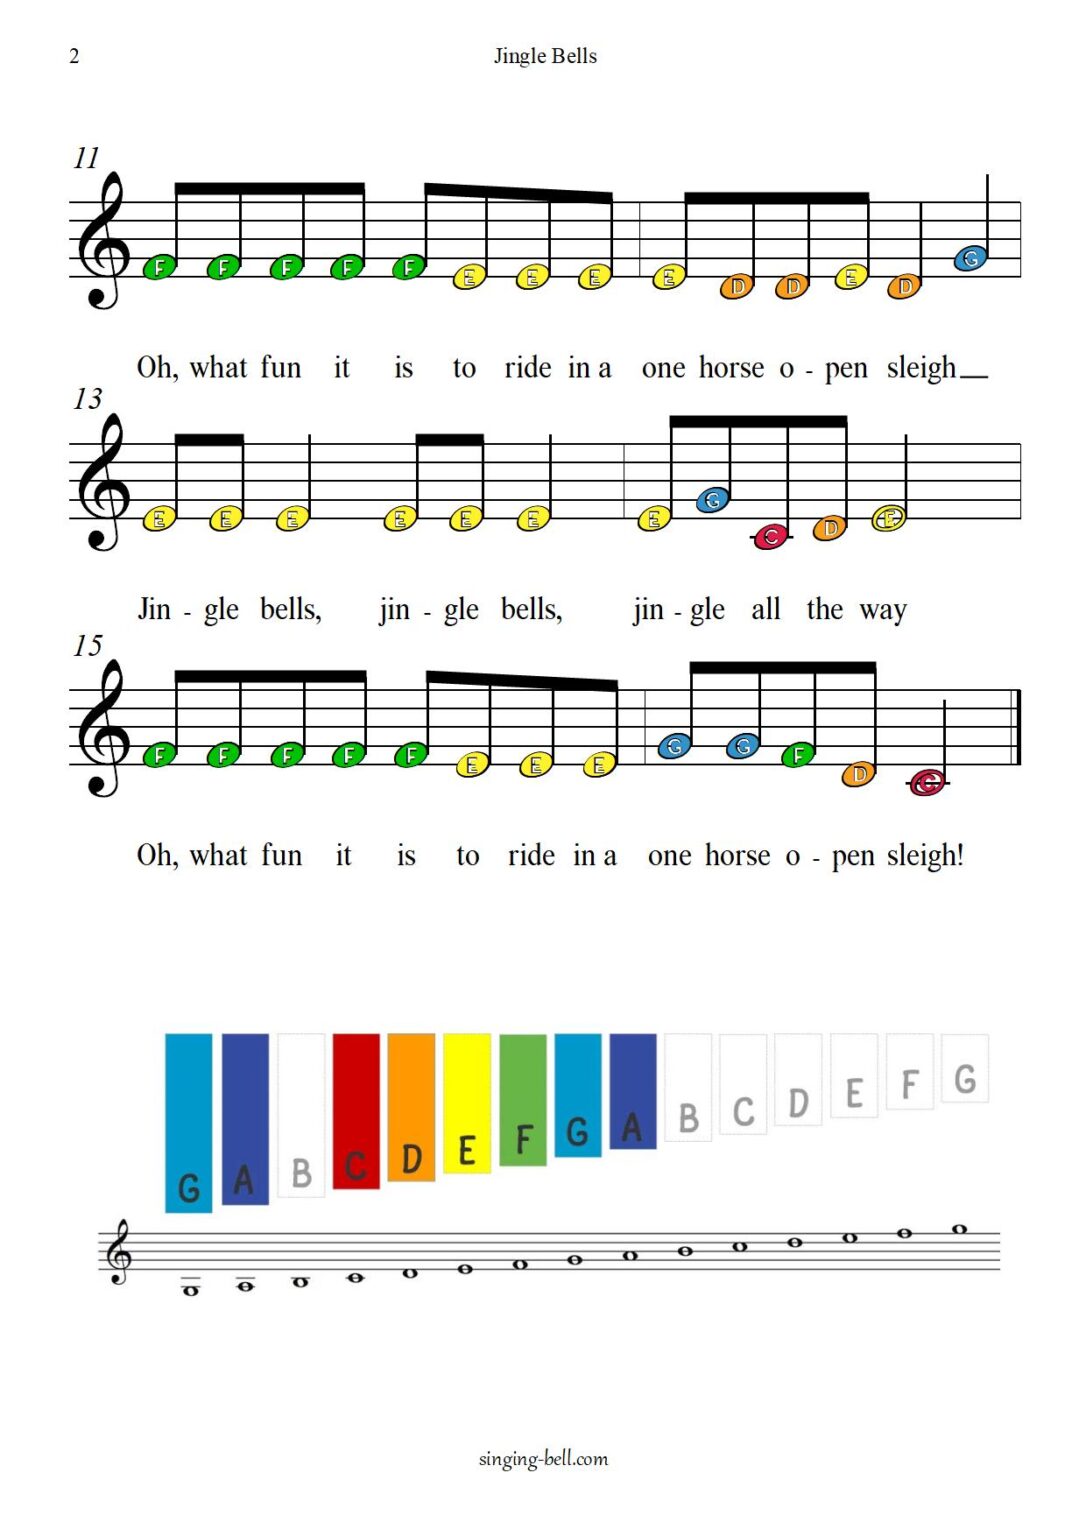 jingle-bells-how-to-play-on-glockenspiel-xylophone-singing-bell